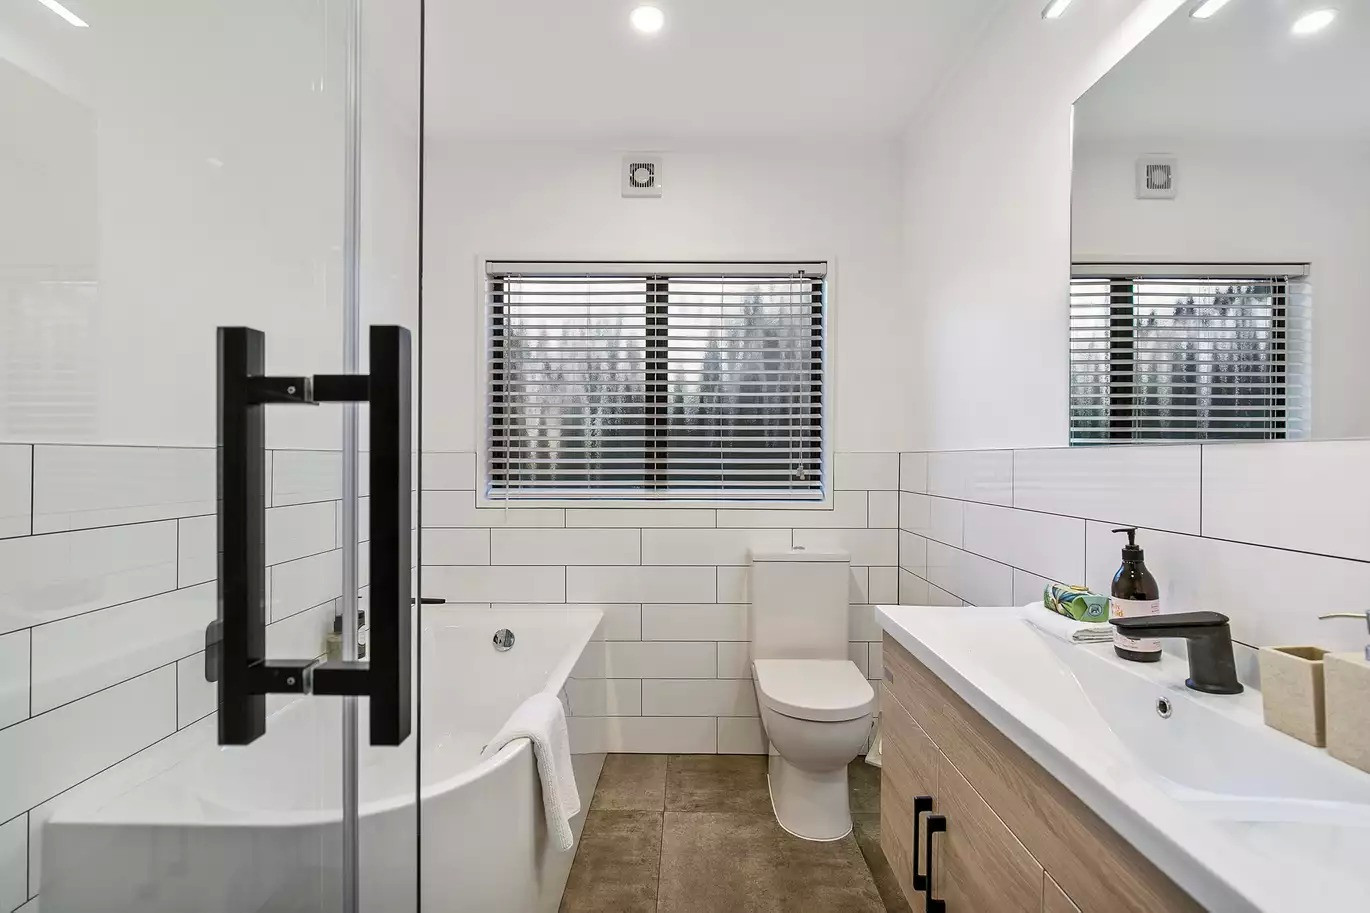 Bathroom Tile Examples
 Top Trends In Bathroom Tile Design Bathroom Tile Design